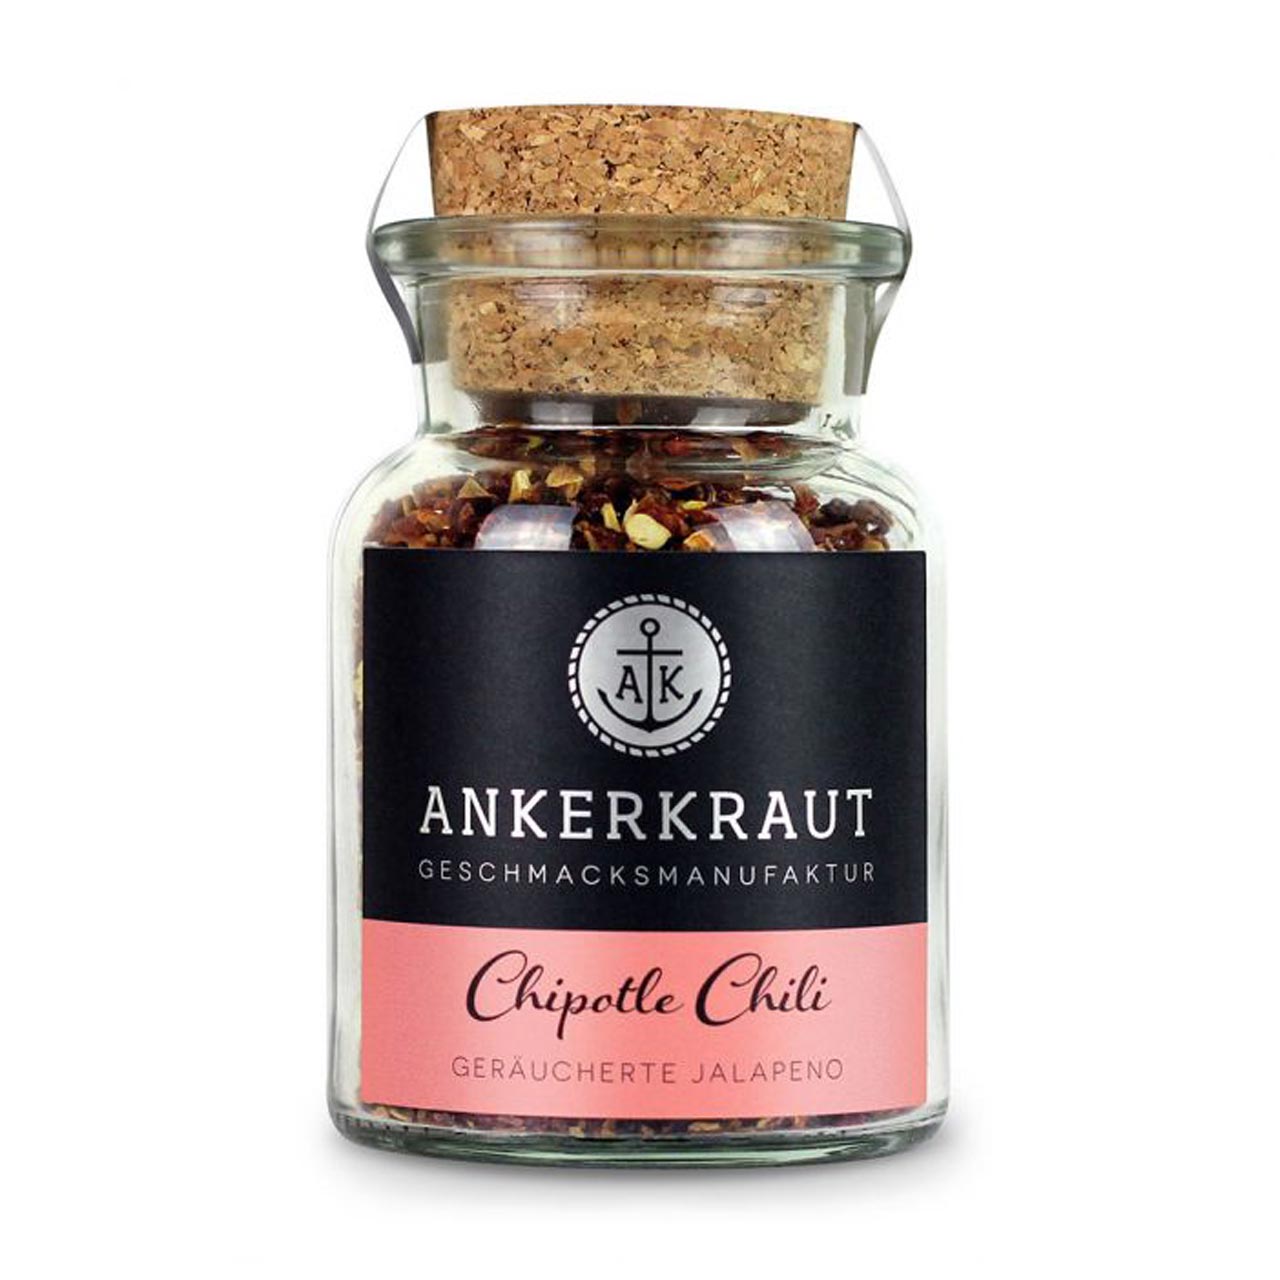 Ankerkraut Chipotle Chili, 55 g Korkenglas